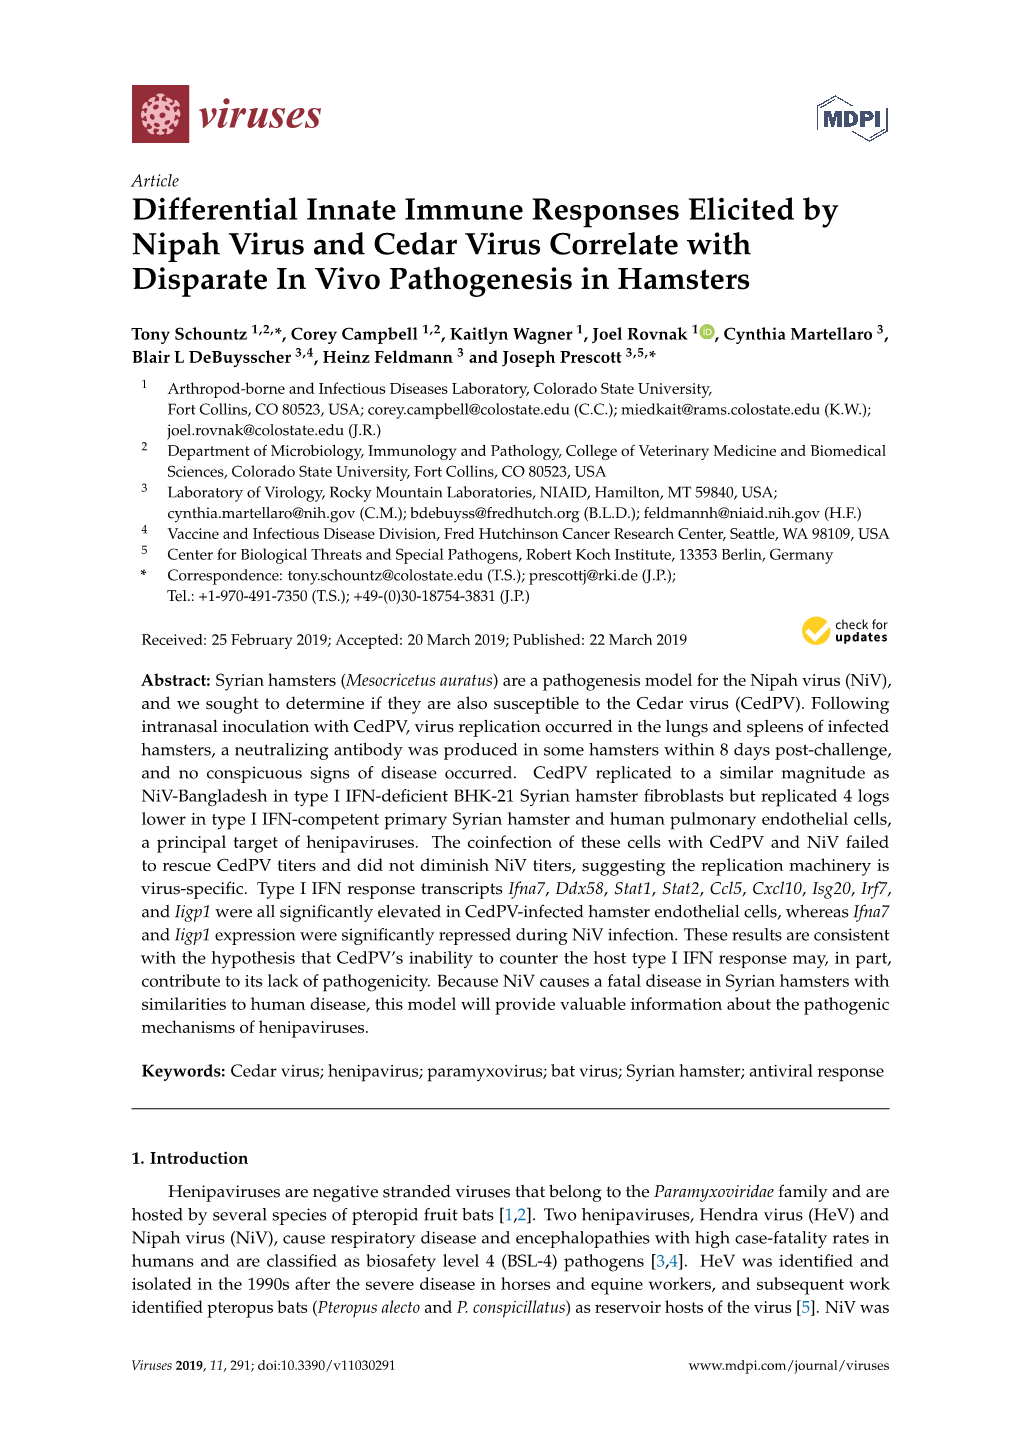 Differential Innate Immune Responses Elicited by Nipah Virus and Cedar Virus Correlate with Disparate in Vivo Pathogenesis in Hamsters